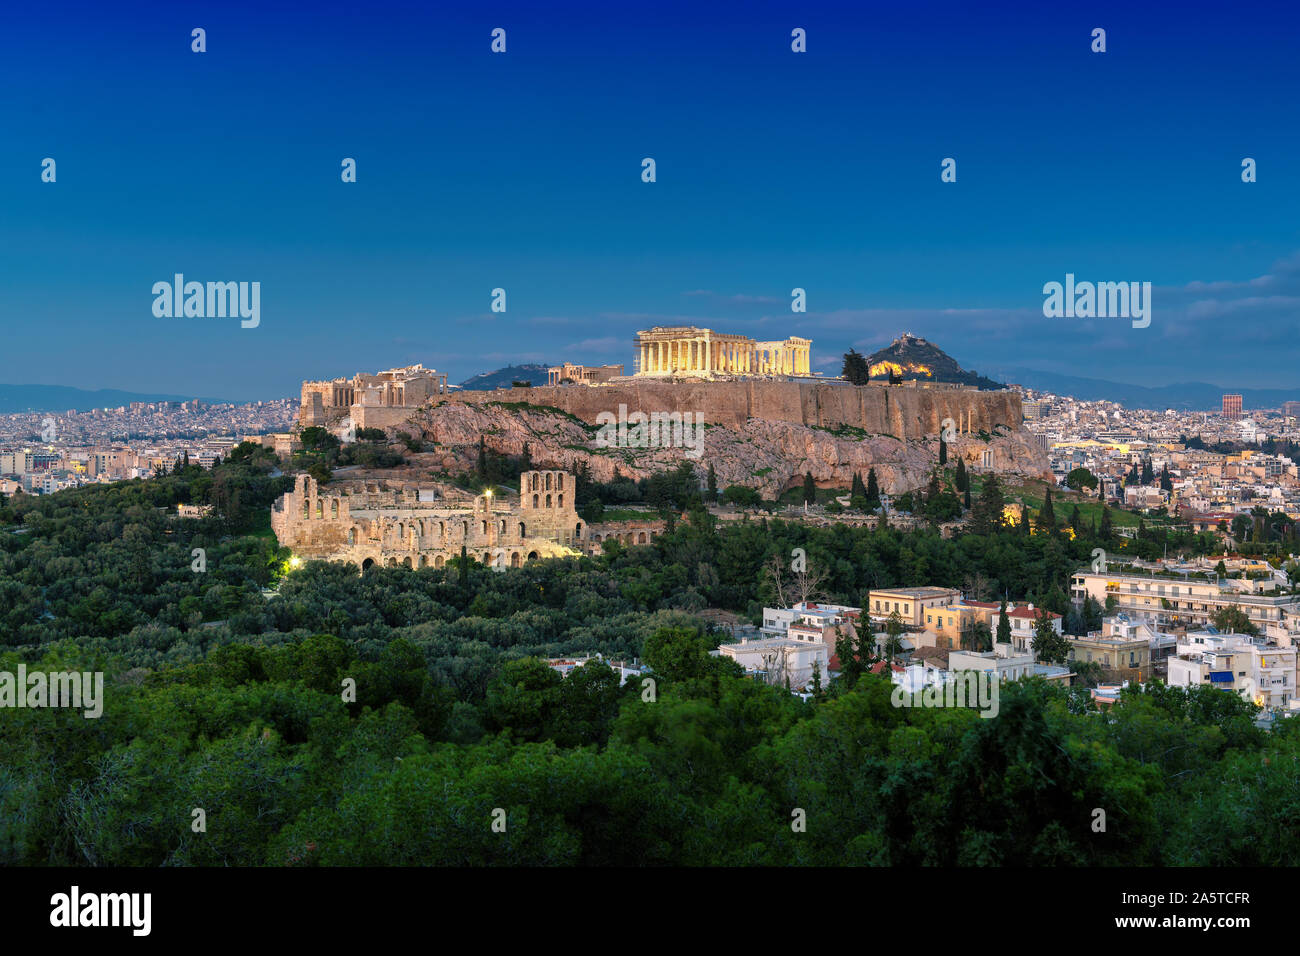 Athens city skyline with Parthenon temple in Acropolis, Athens, Greece. Stock Photo